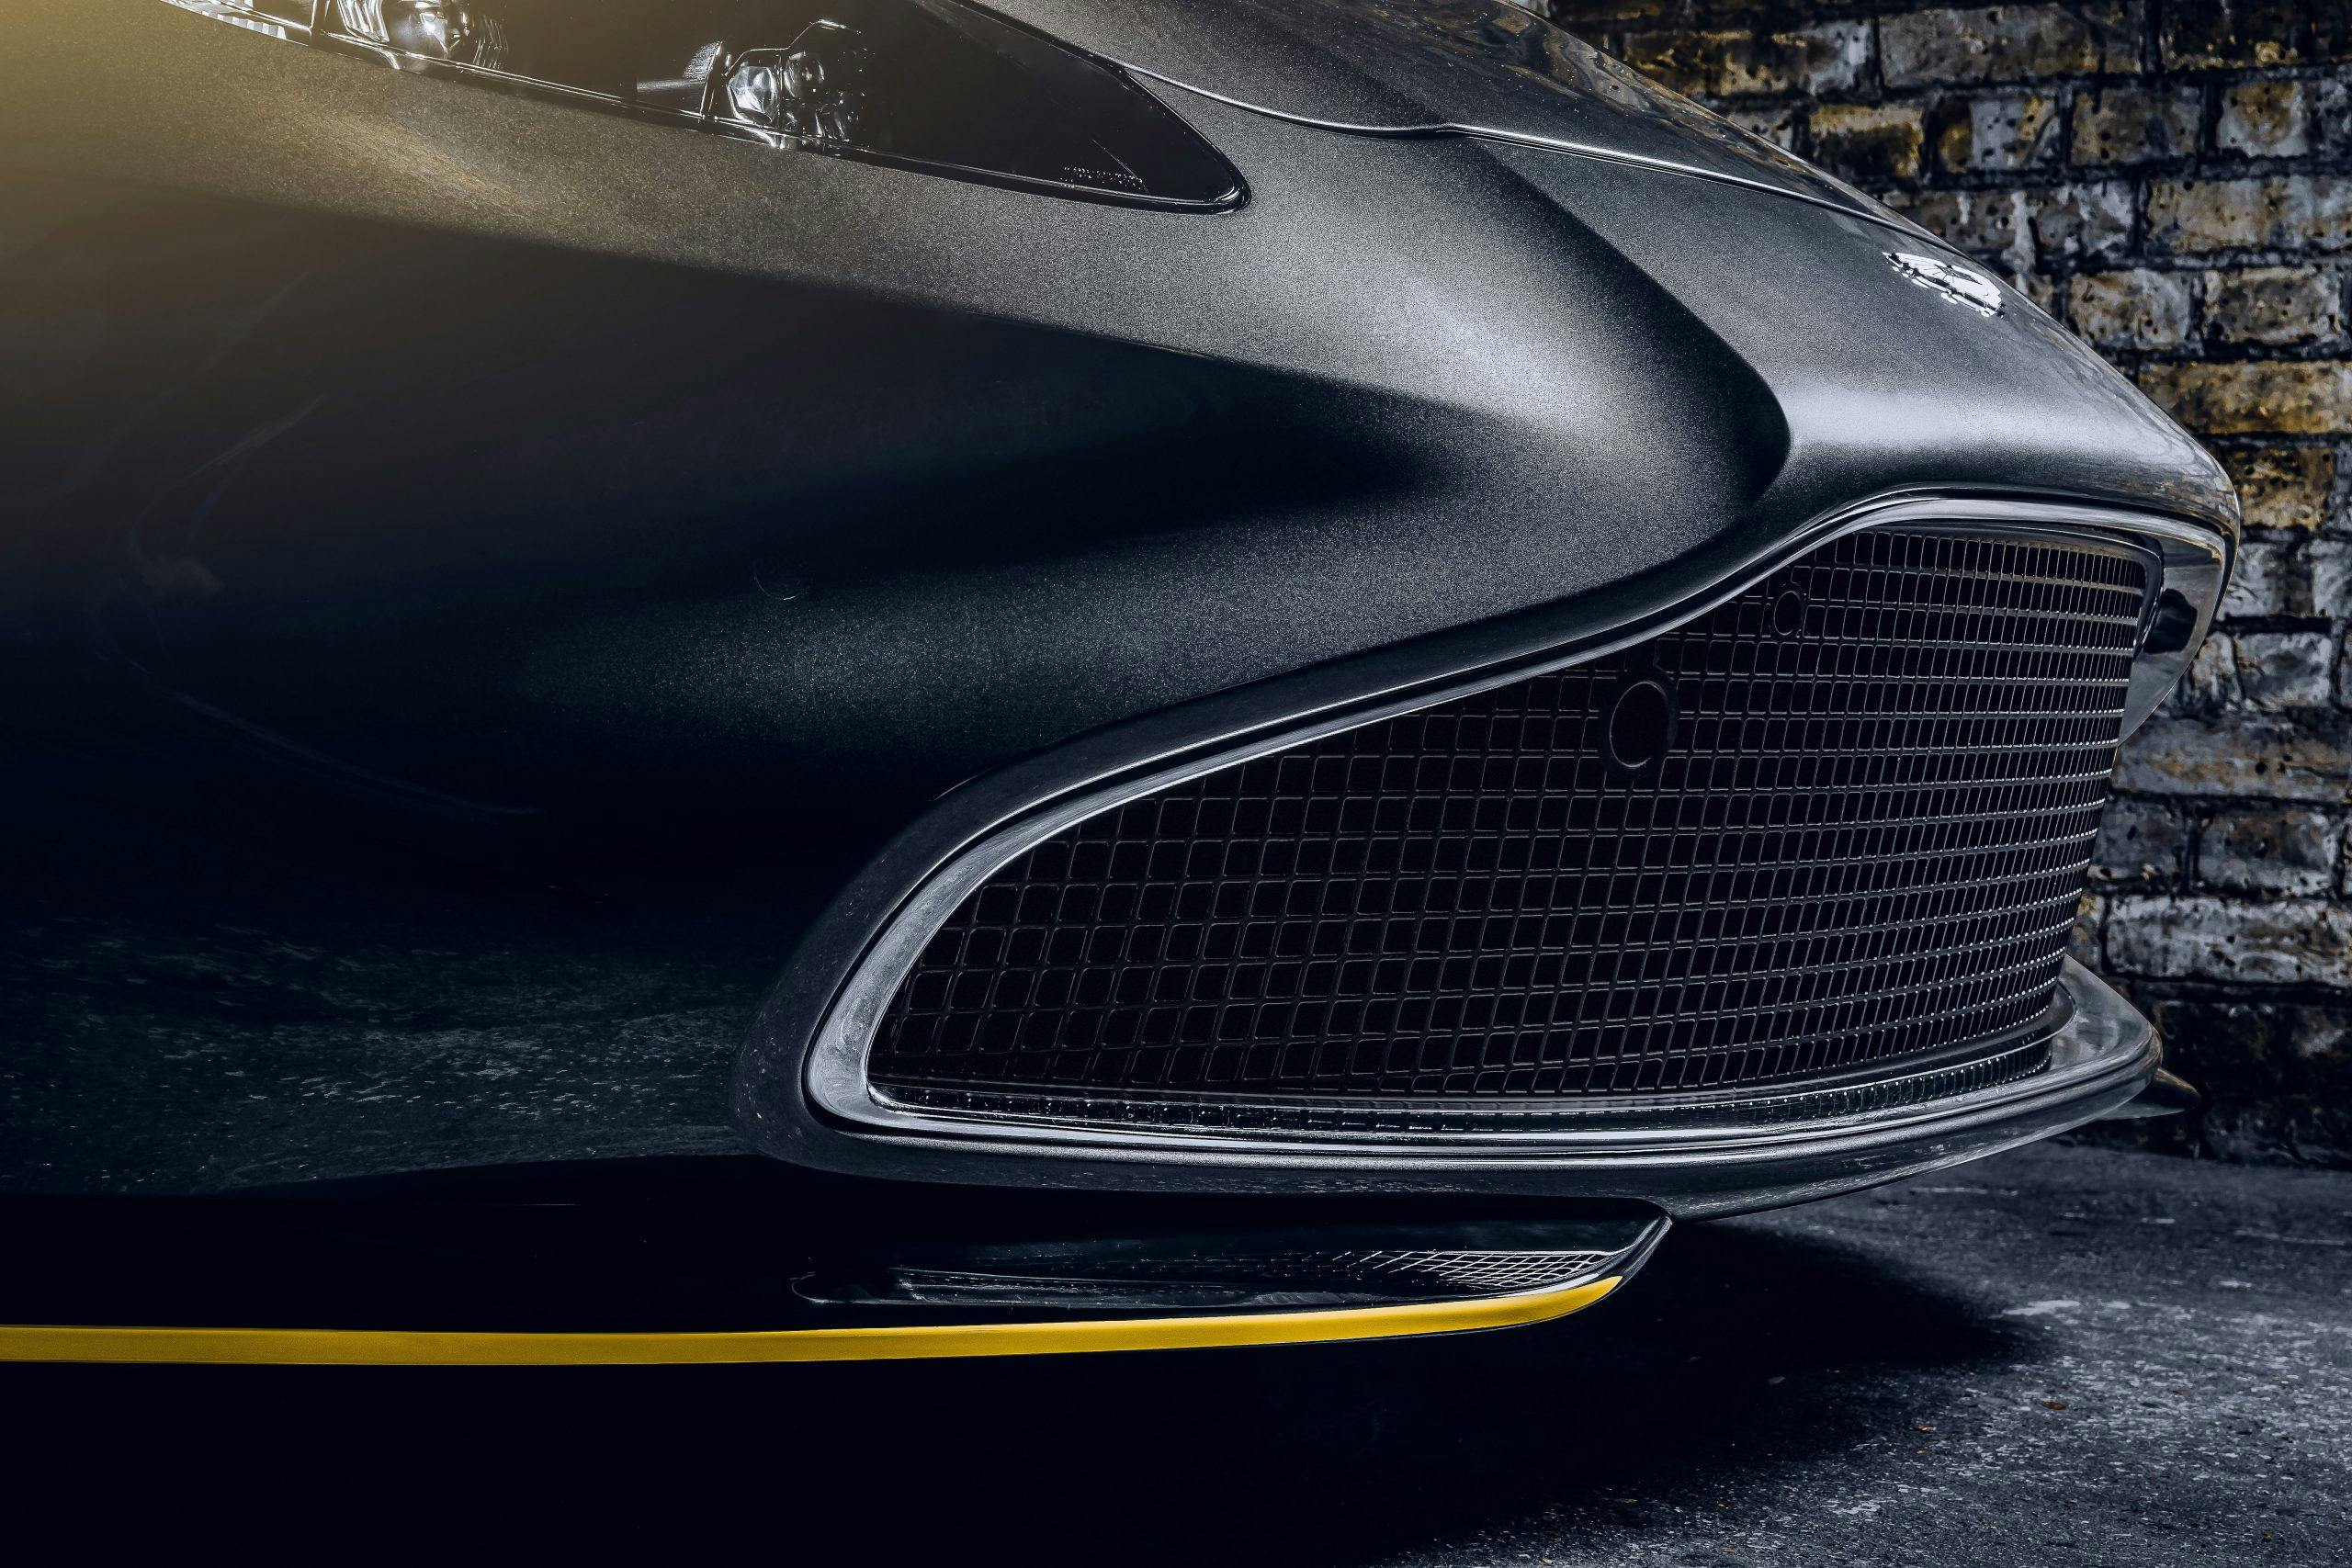 Aston Martin Vantage 007 Edition front grille